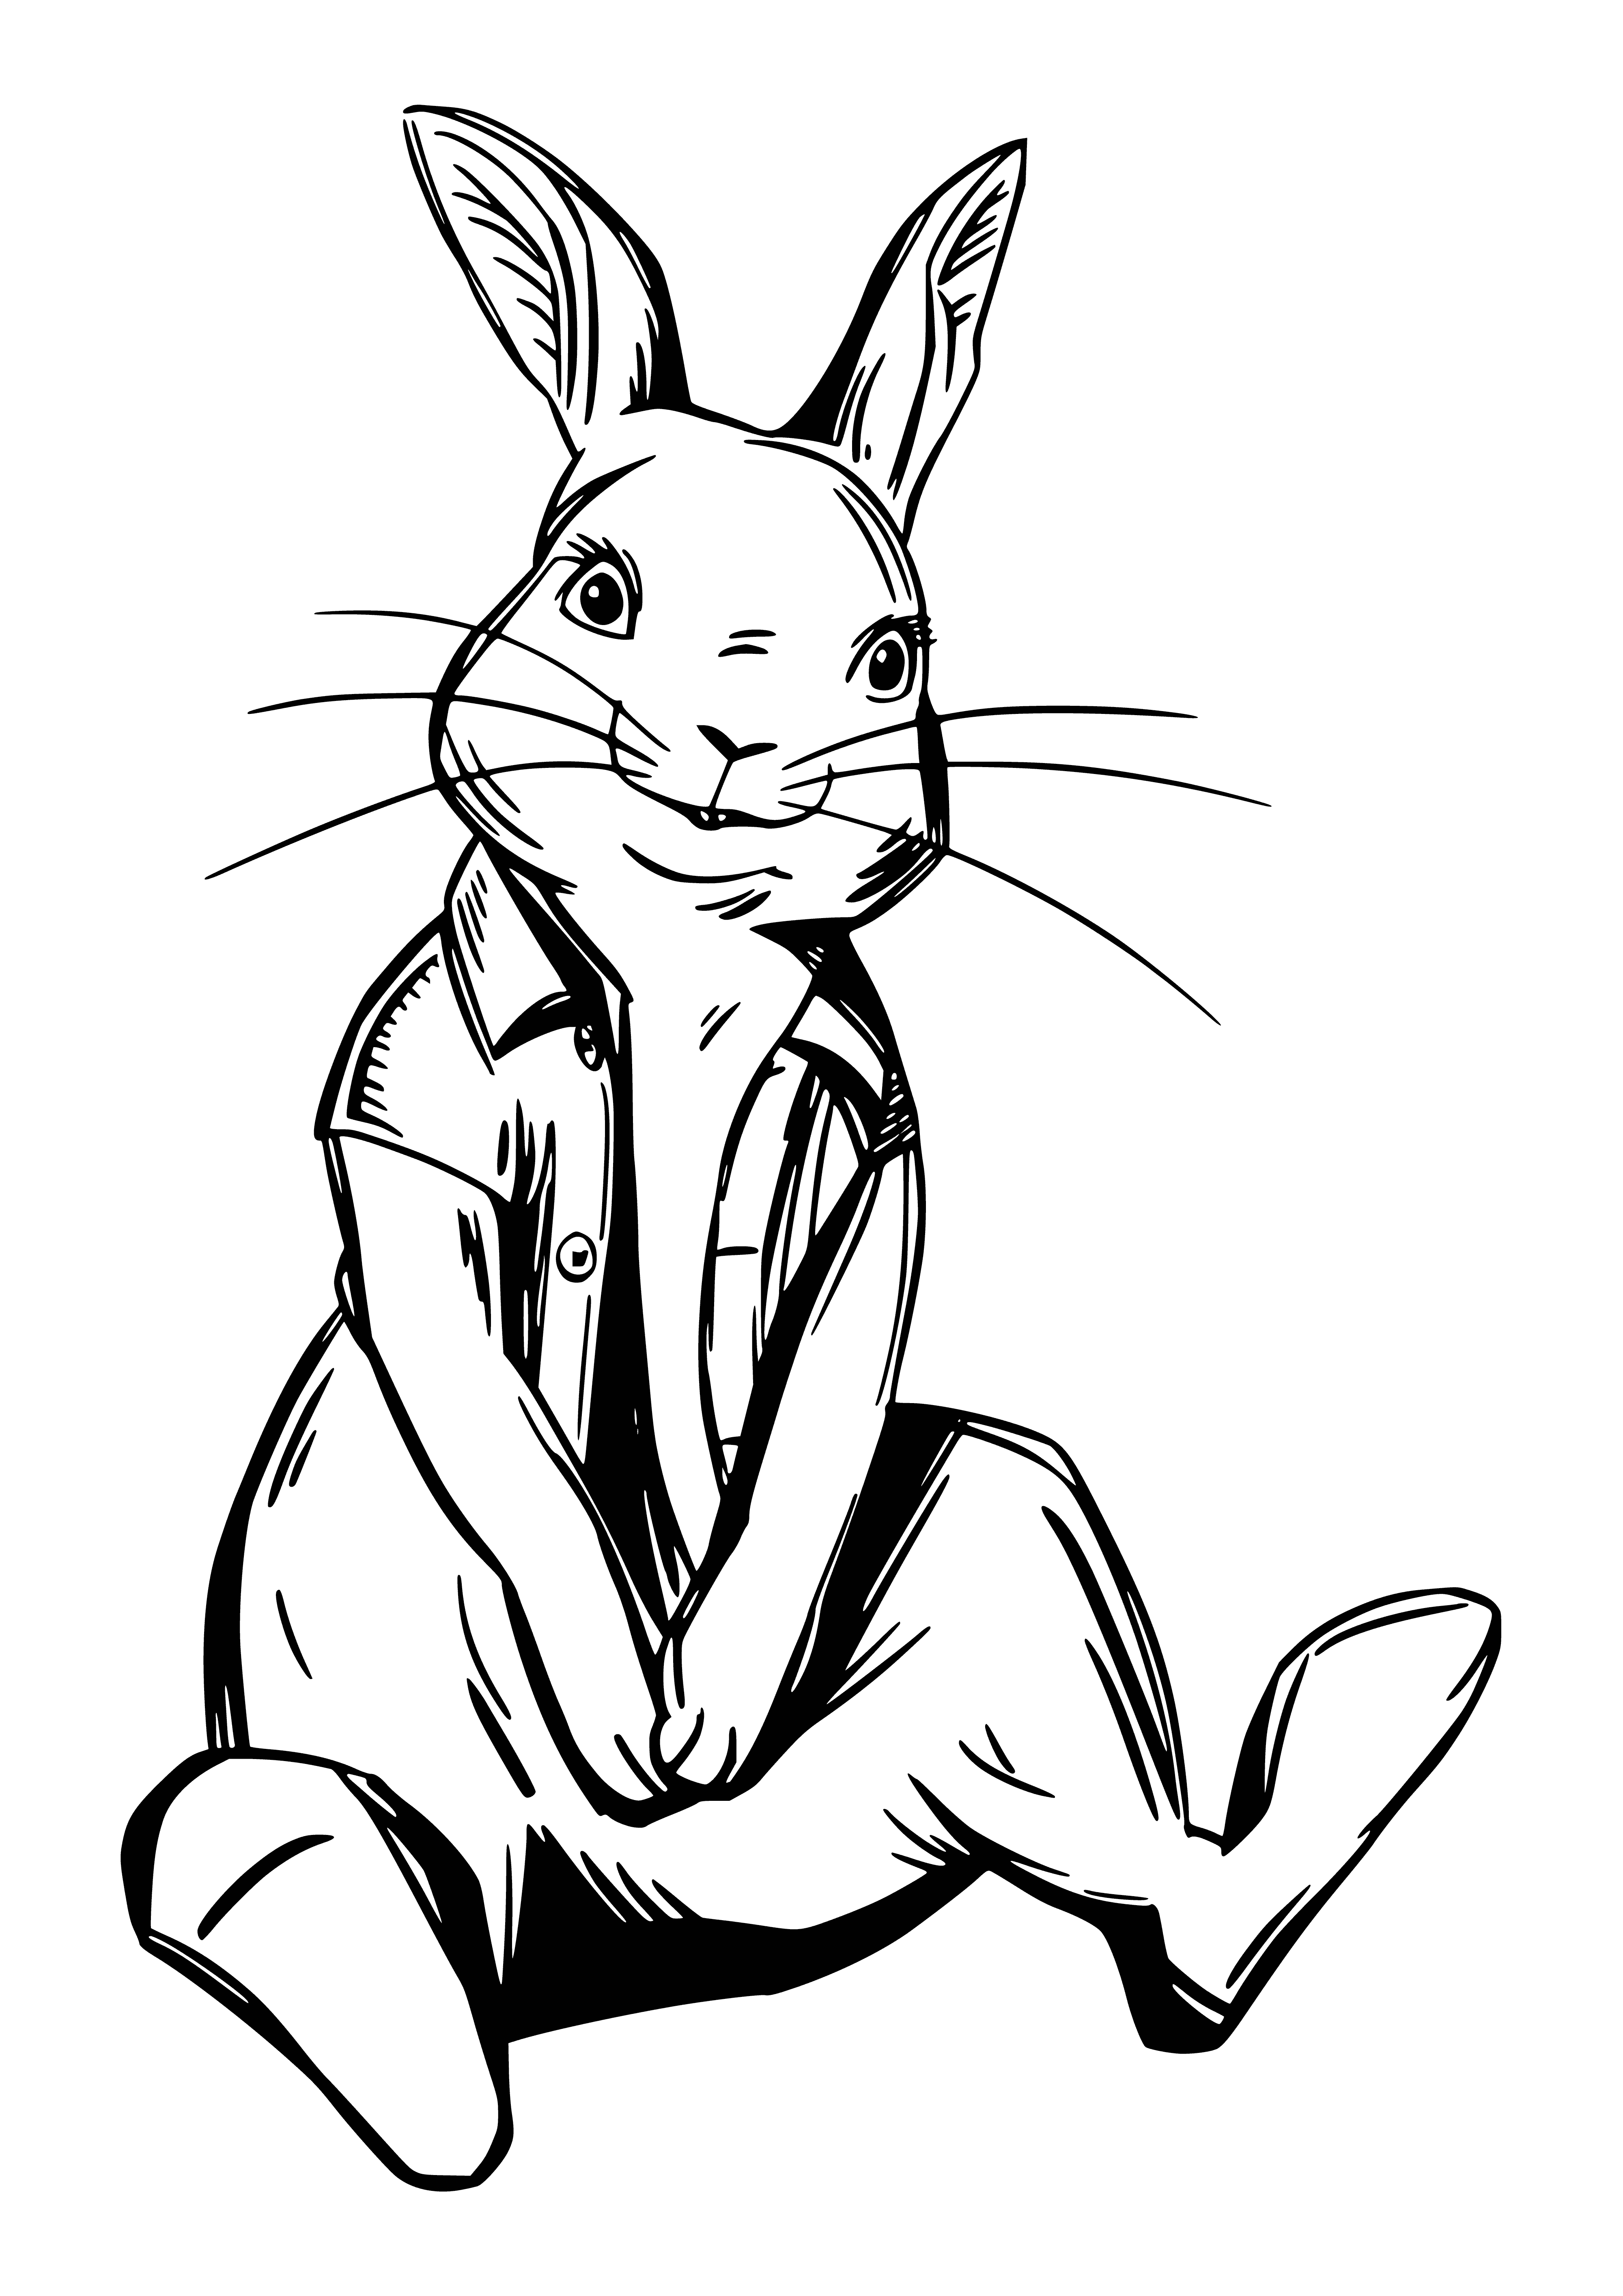 Rabbit Pixie coloring page